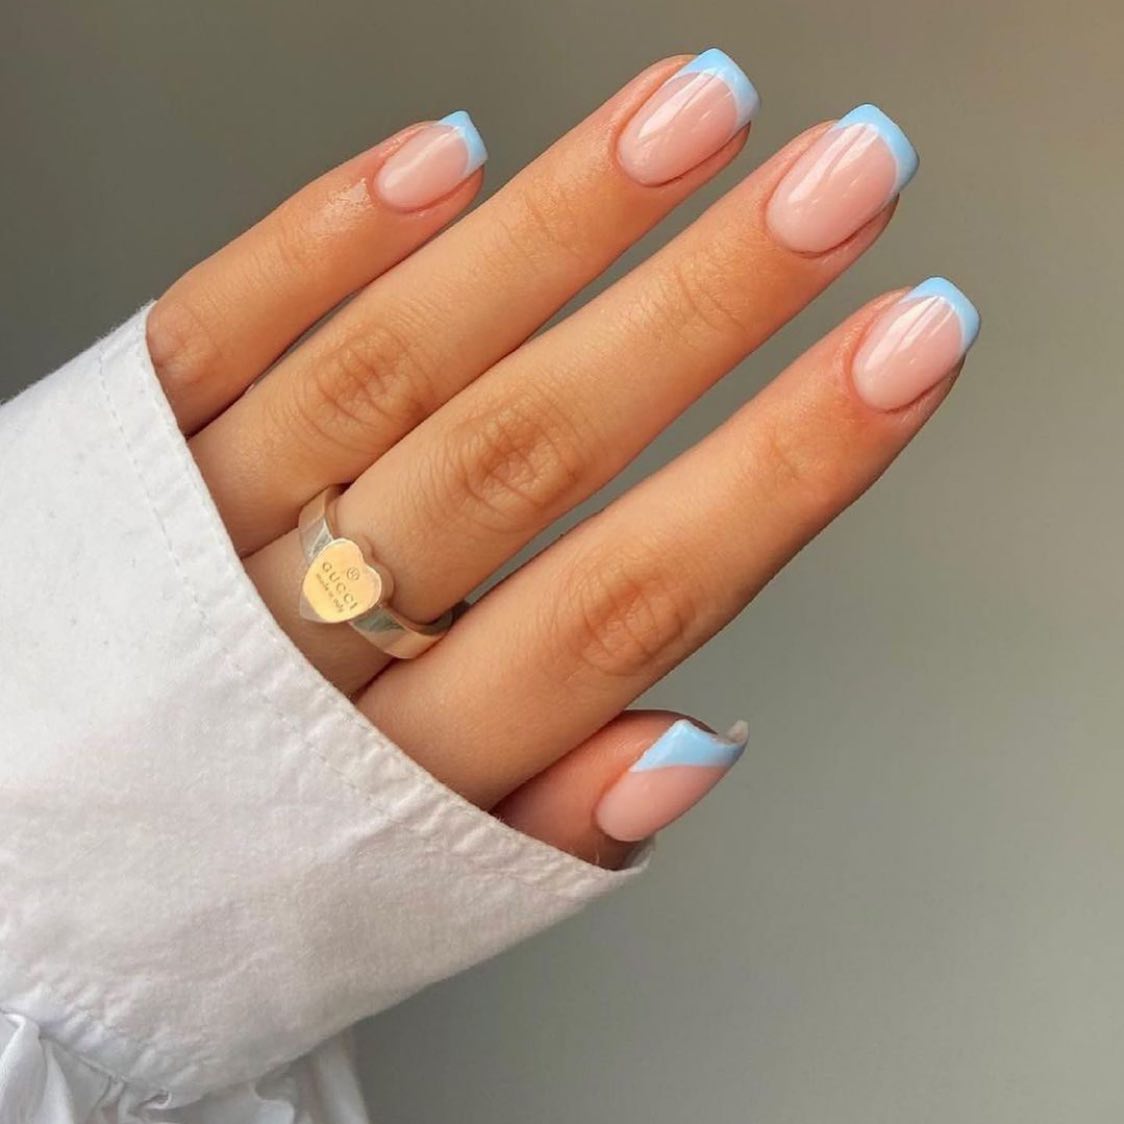 Blue Wedding Nails